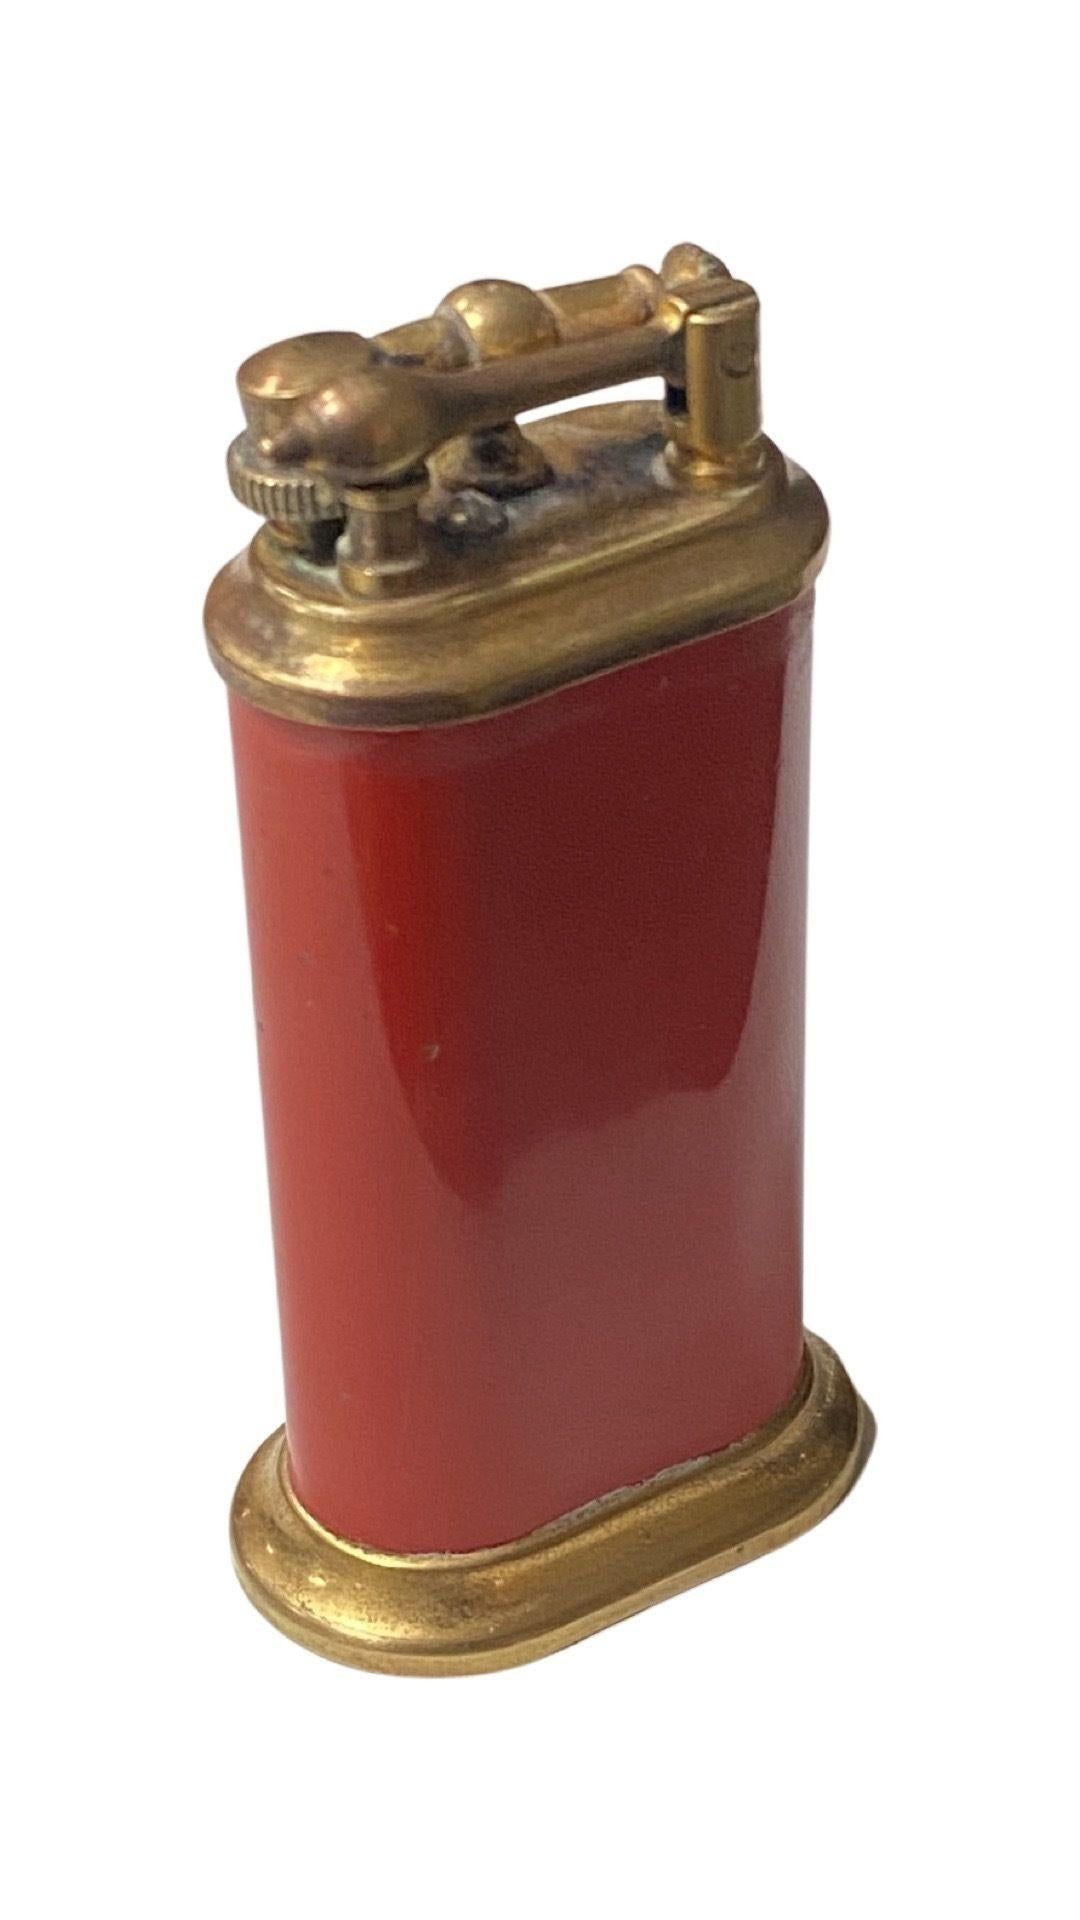 Art Deco 1930s Brass Lift Arm Table Cigarette Lighter by Park Sherman